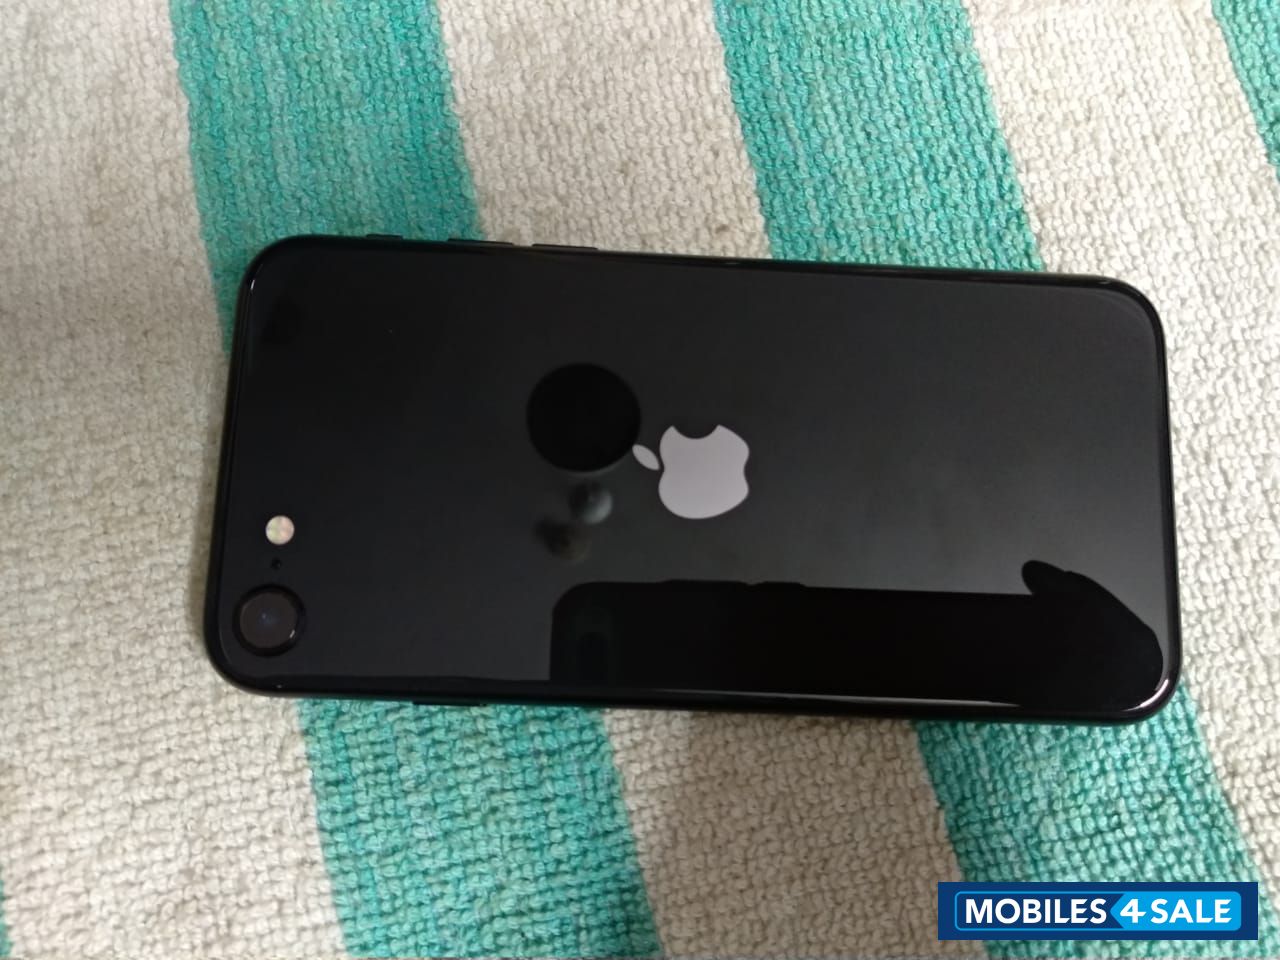 Black Apple iPhone SE